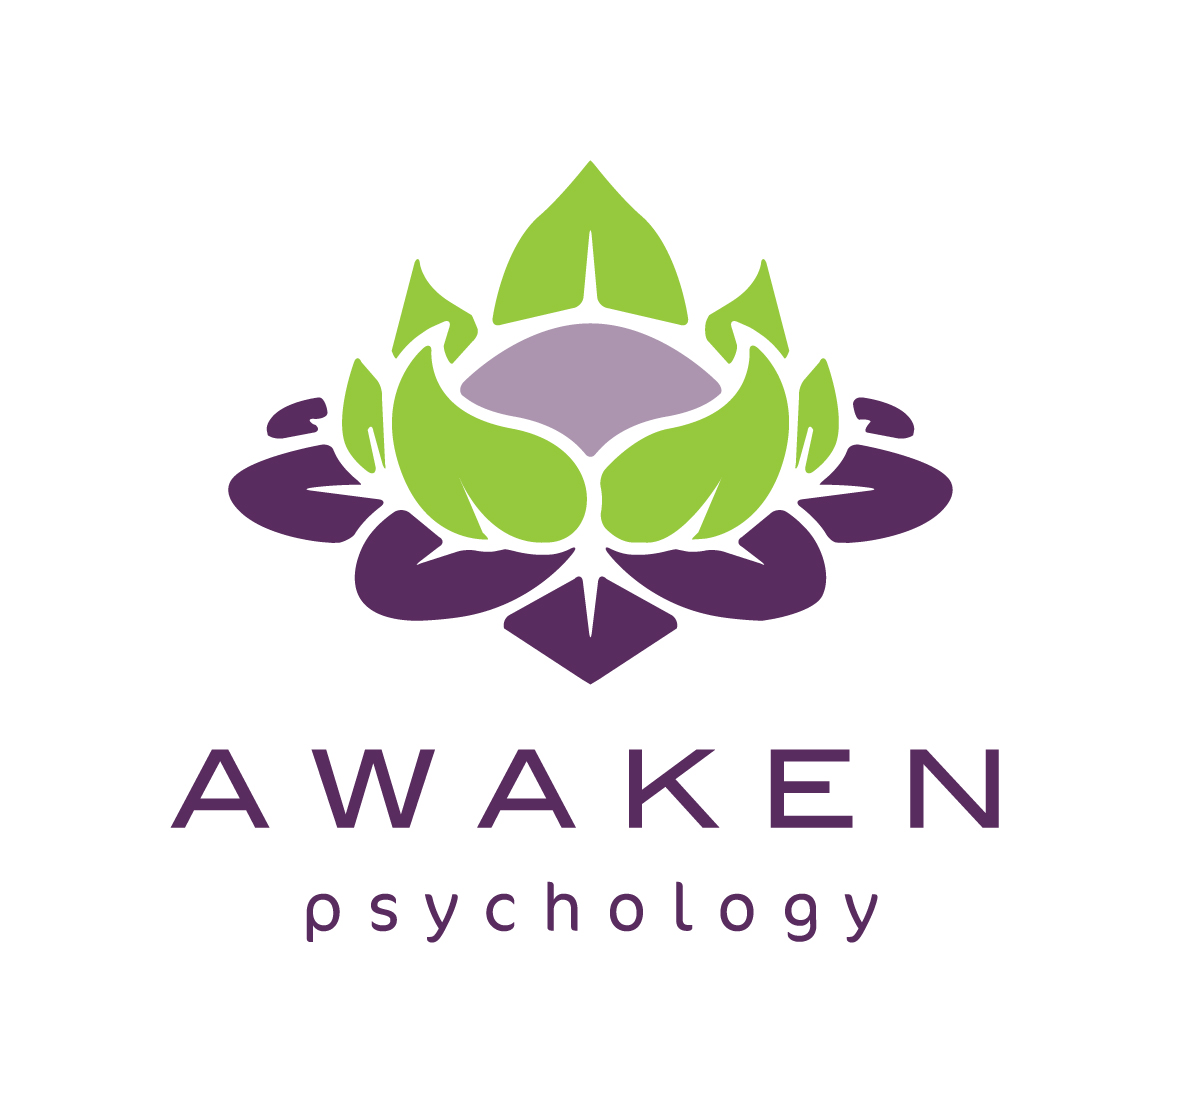 Awaken Psychology